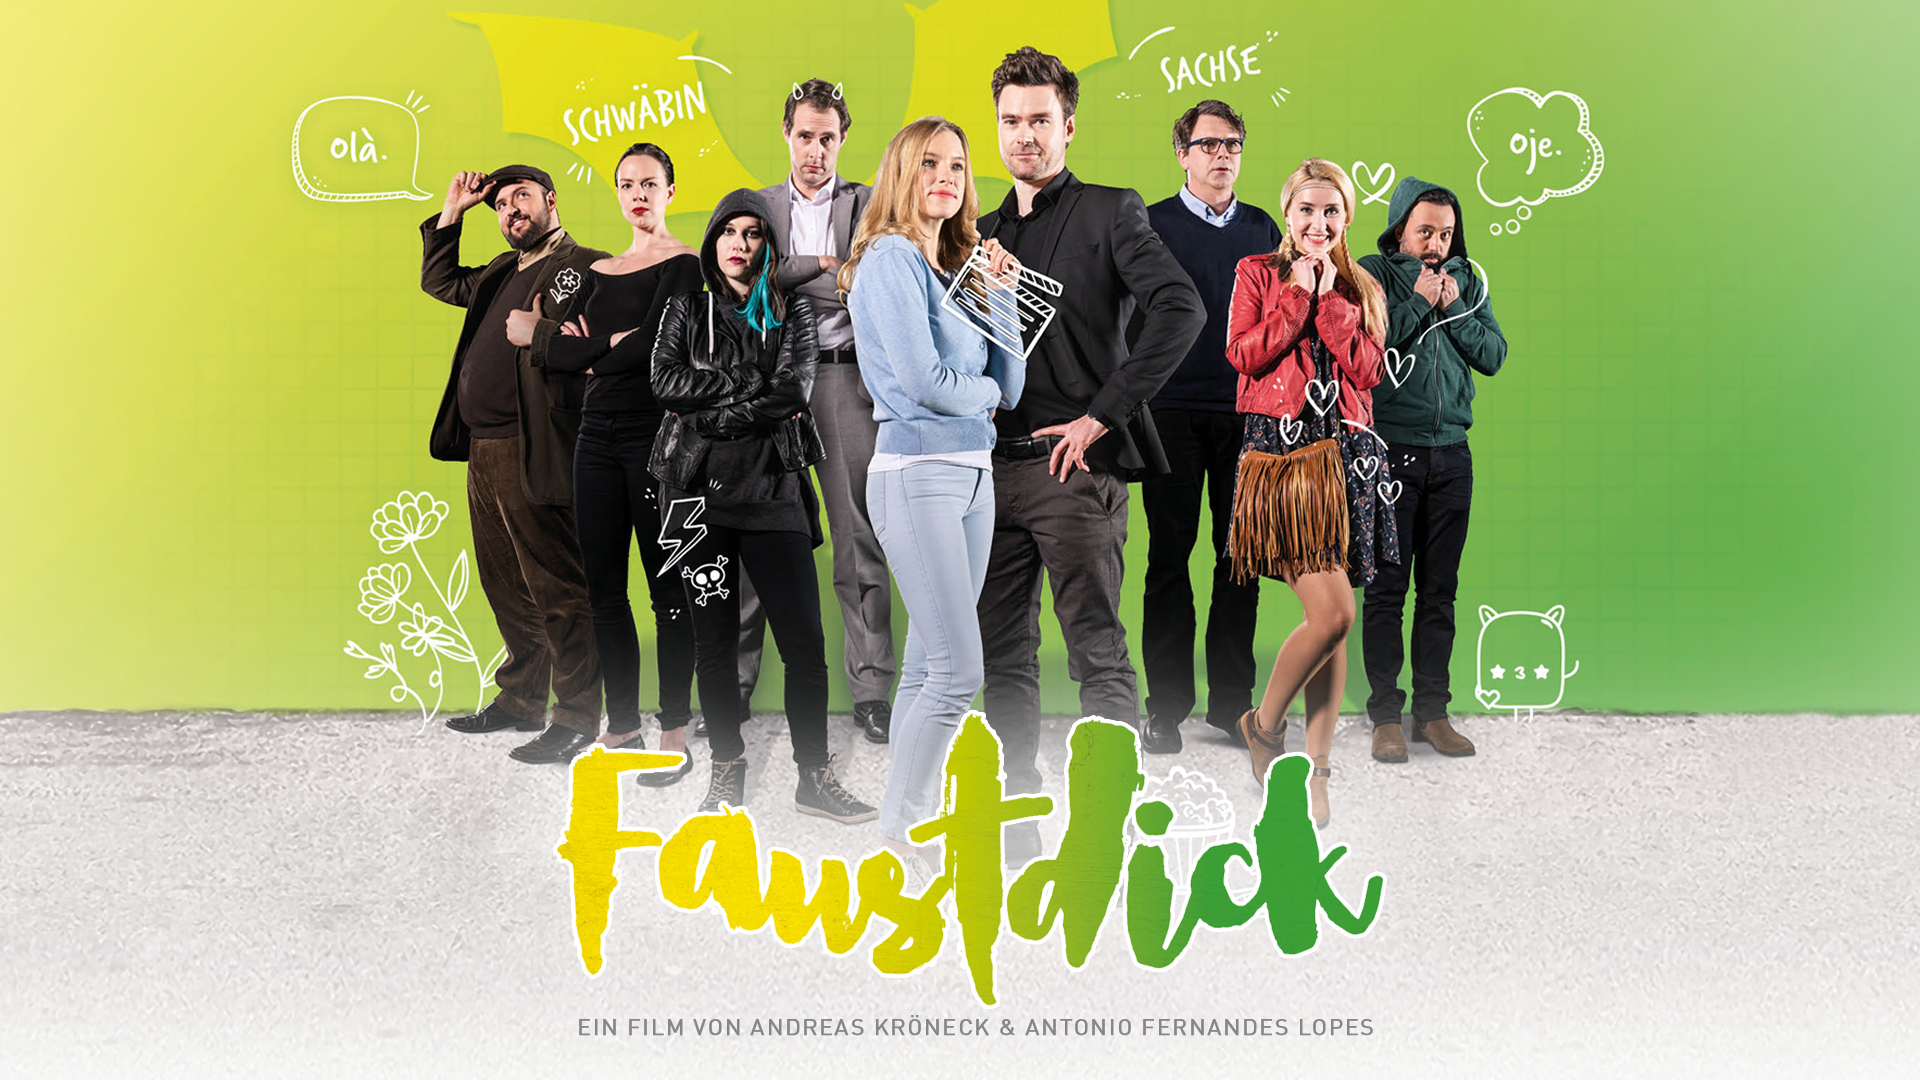 Faustdick | Feature Film